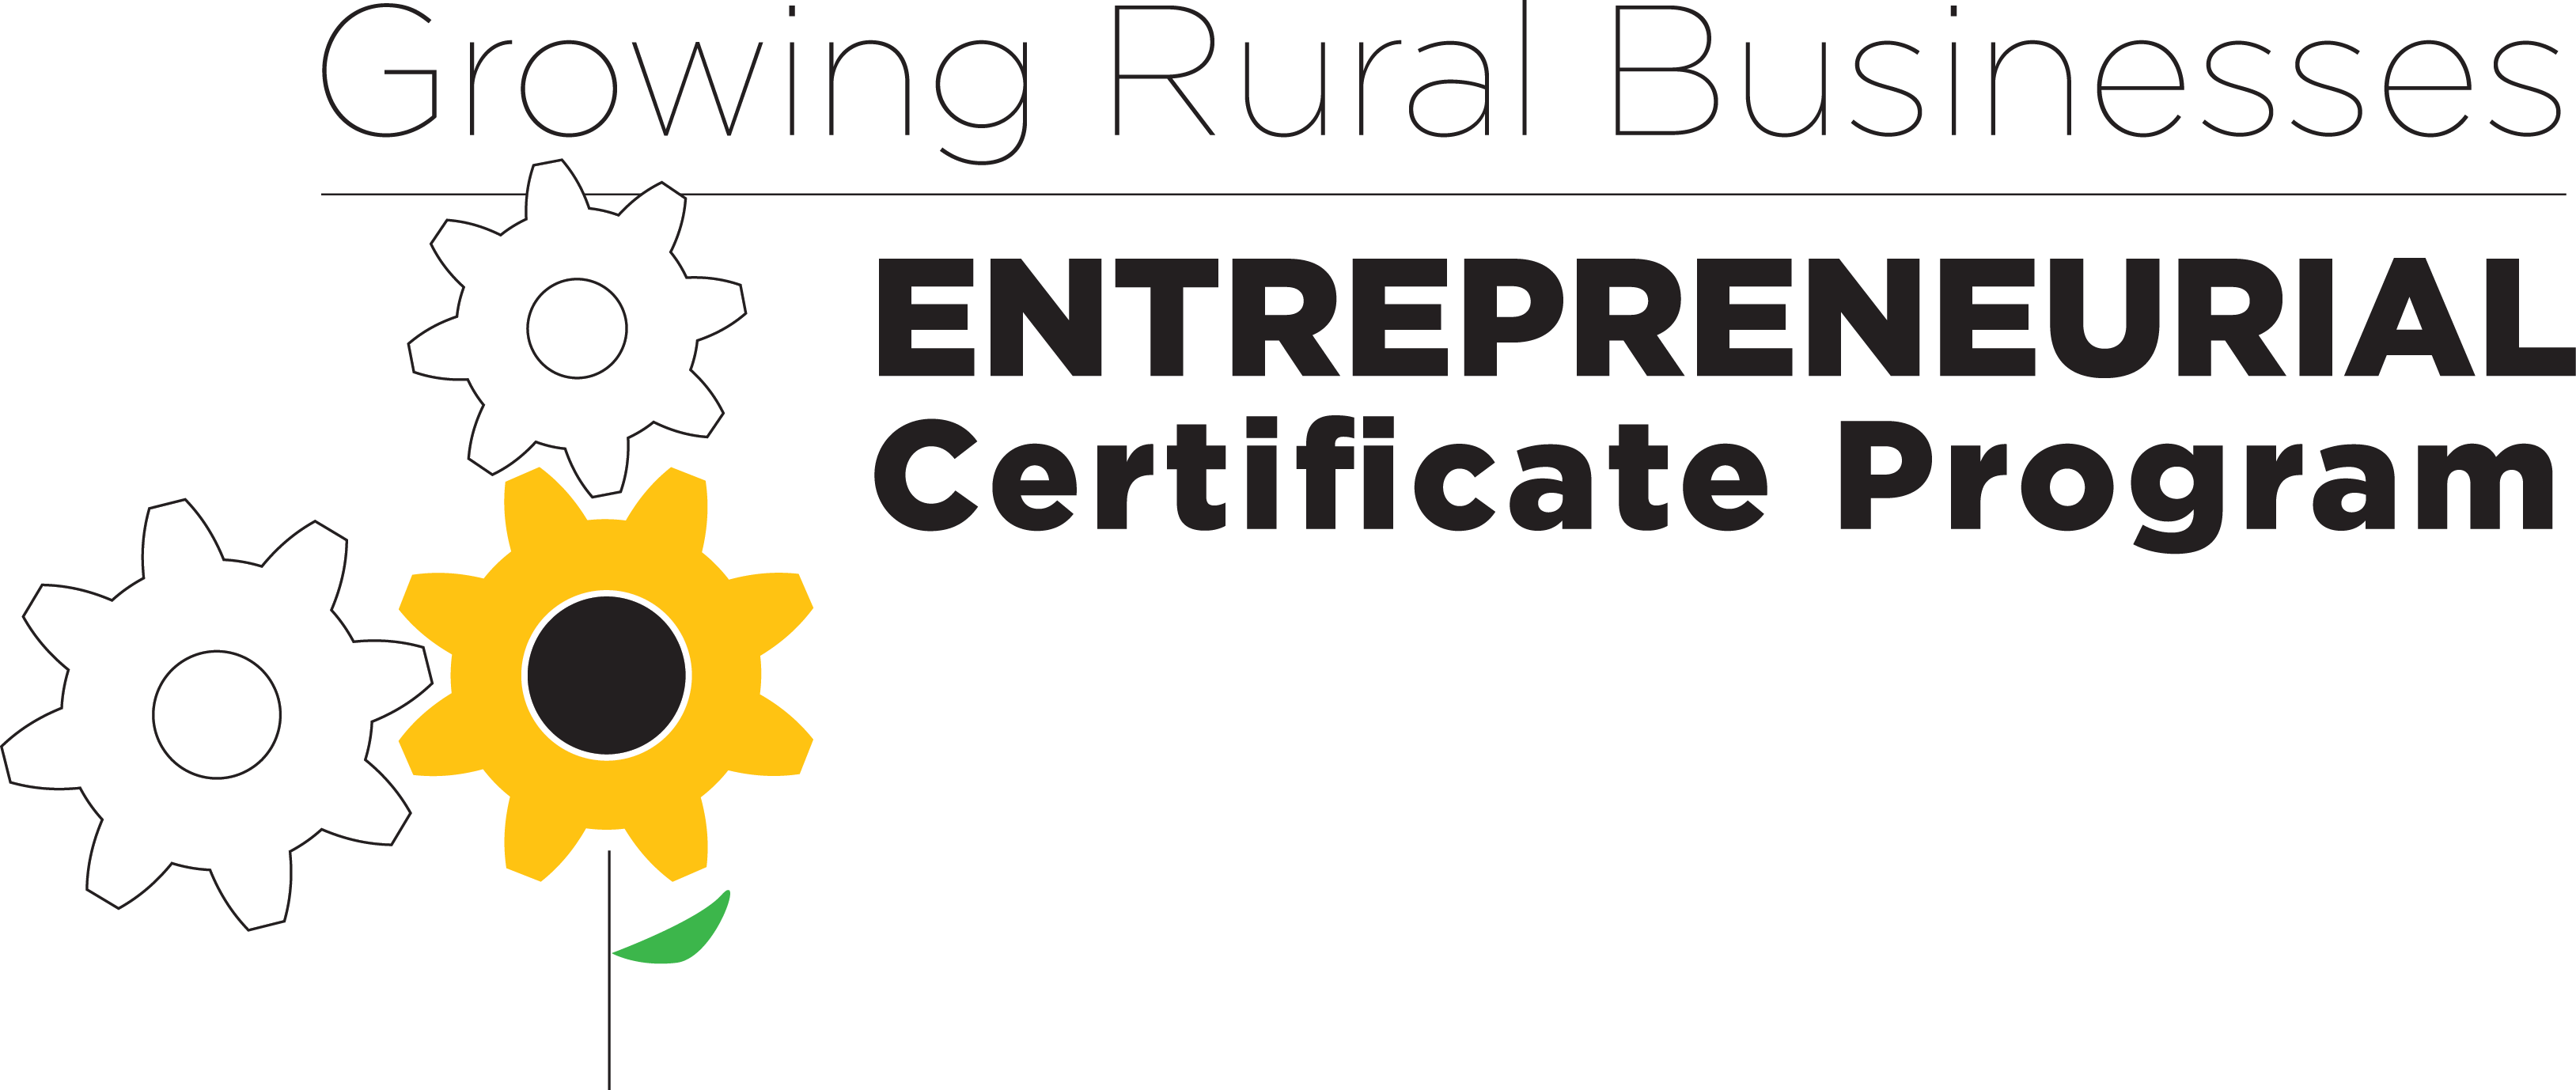 Growing Rural Businesses